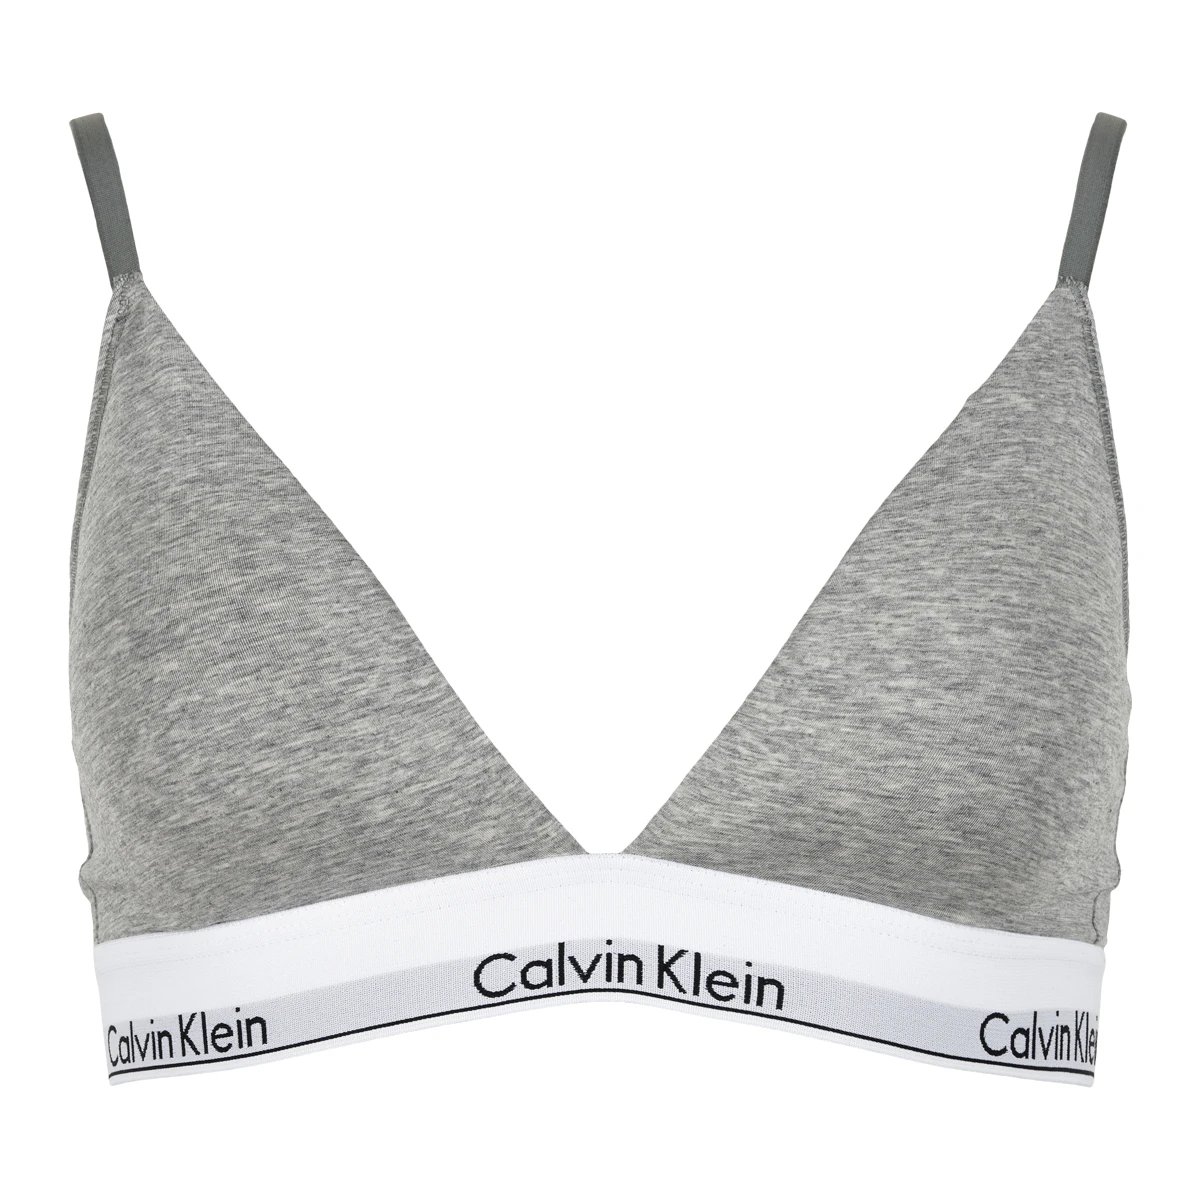 Calvin Klein underkläder - Stort utbud og goda priser - Köp här